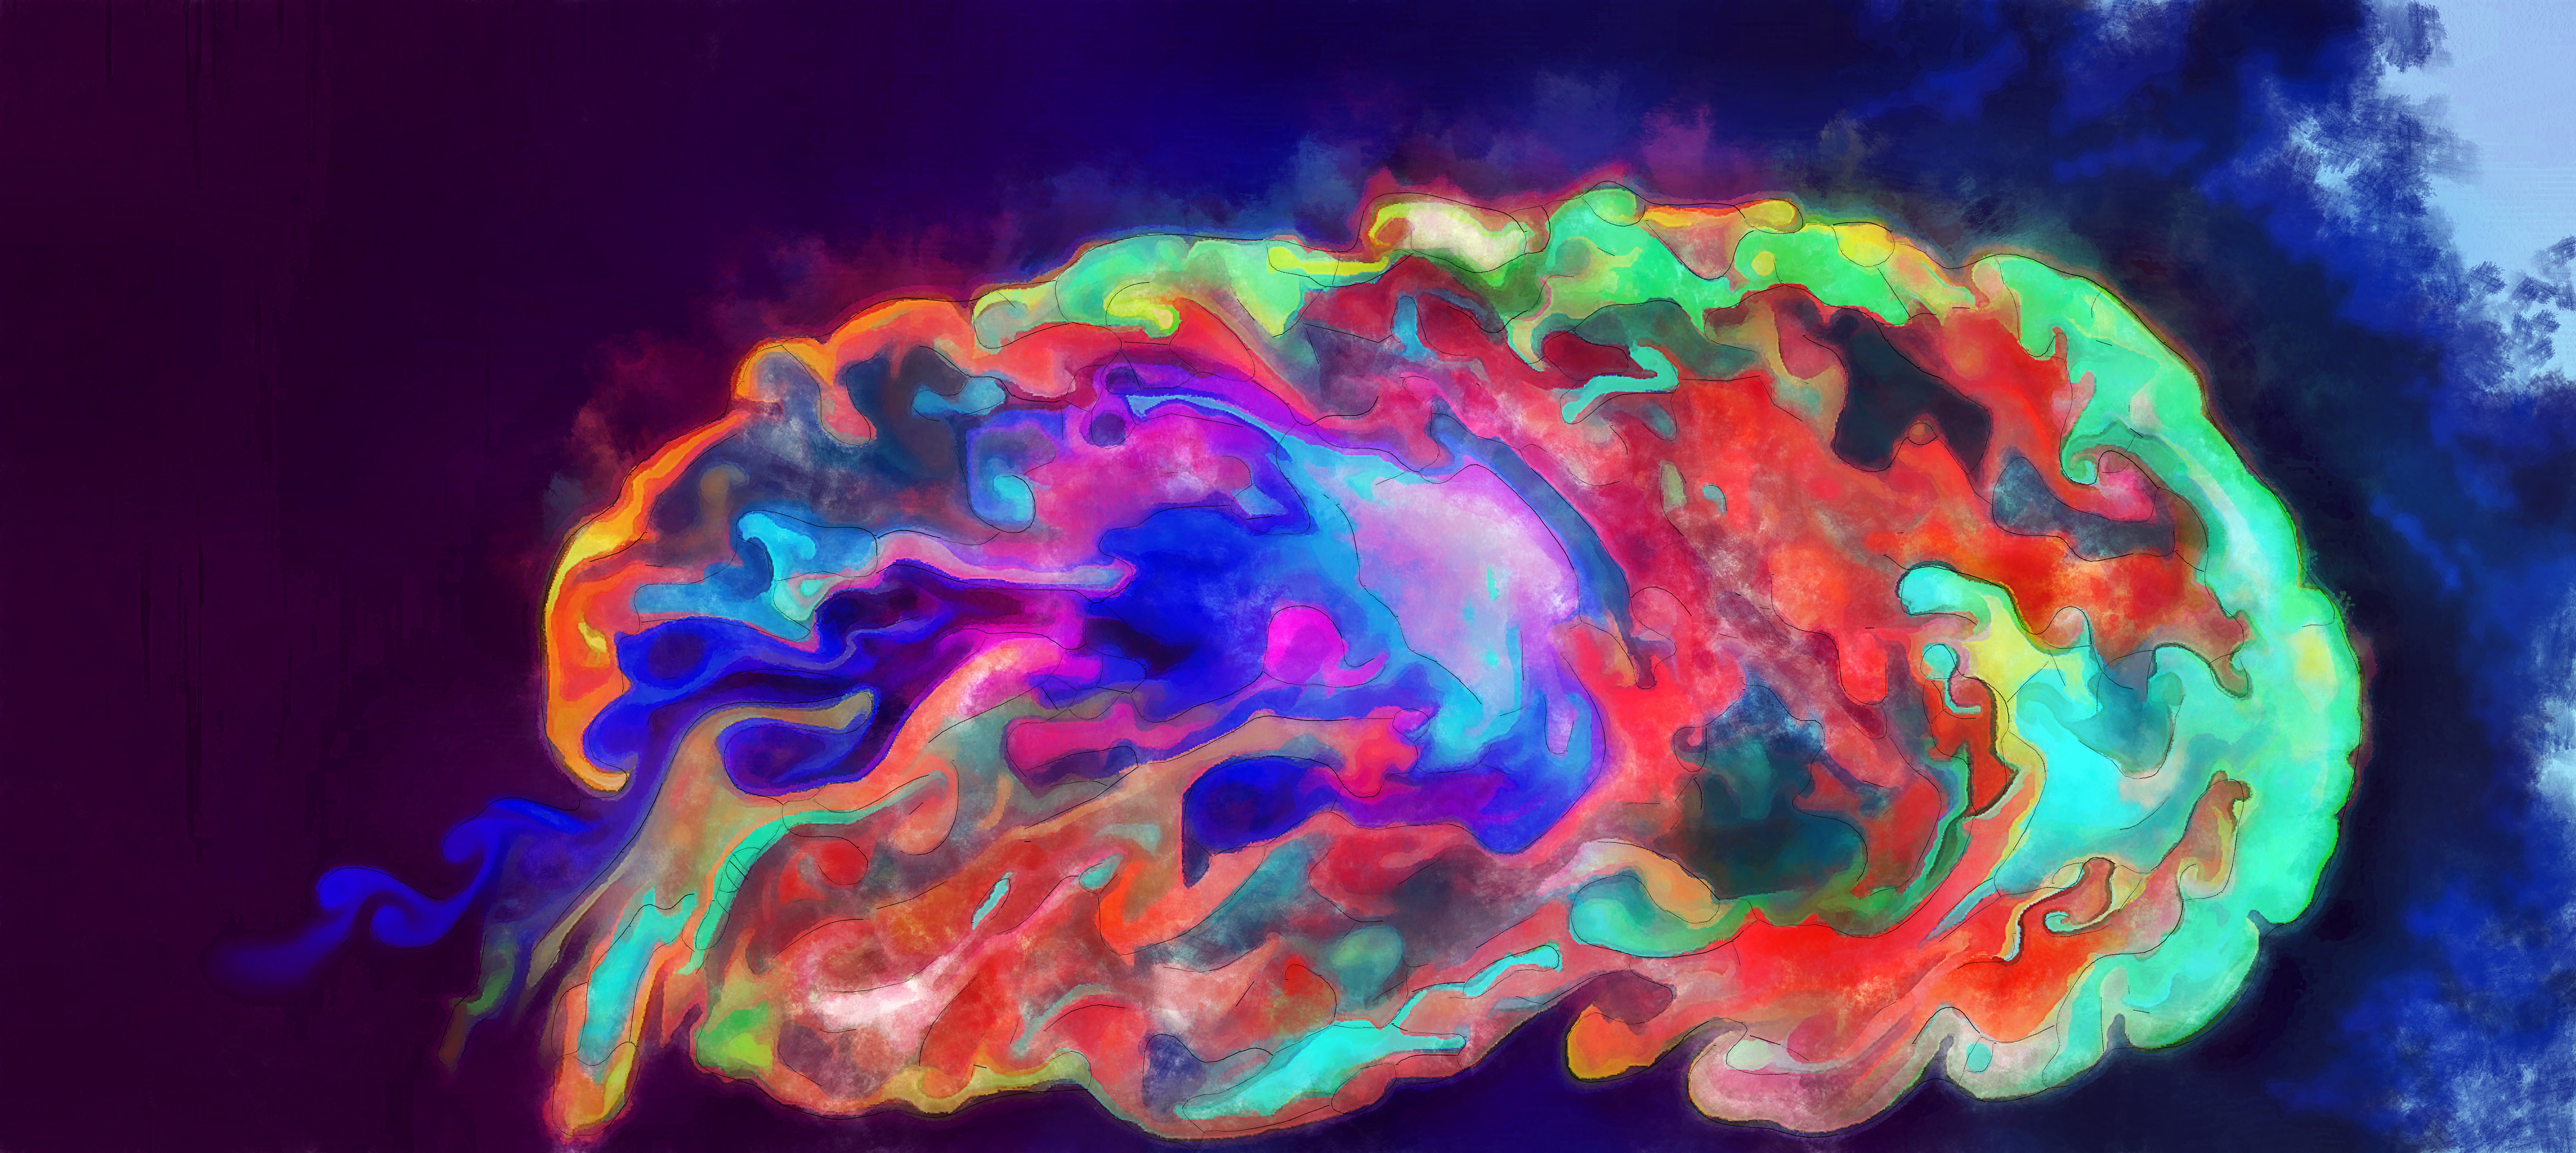 Paint Splash Watercolor Fluid Ink Abstract Digital 5600x2506